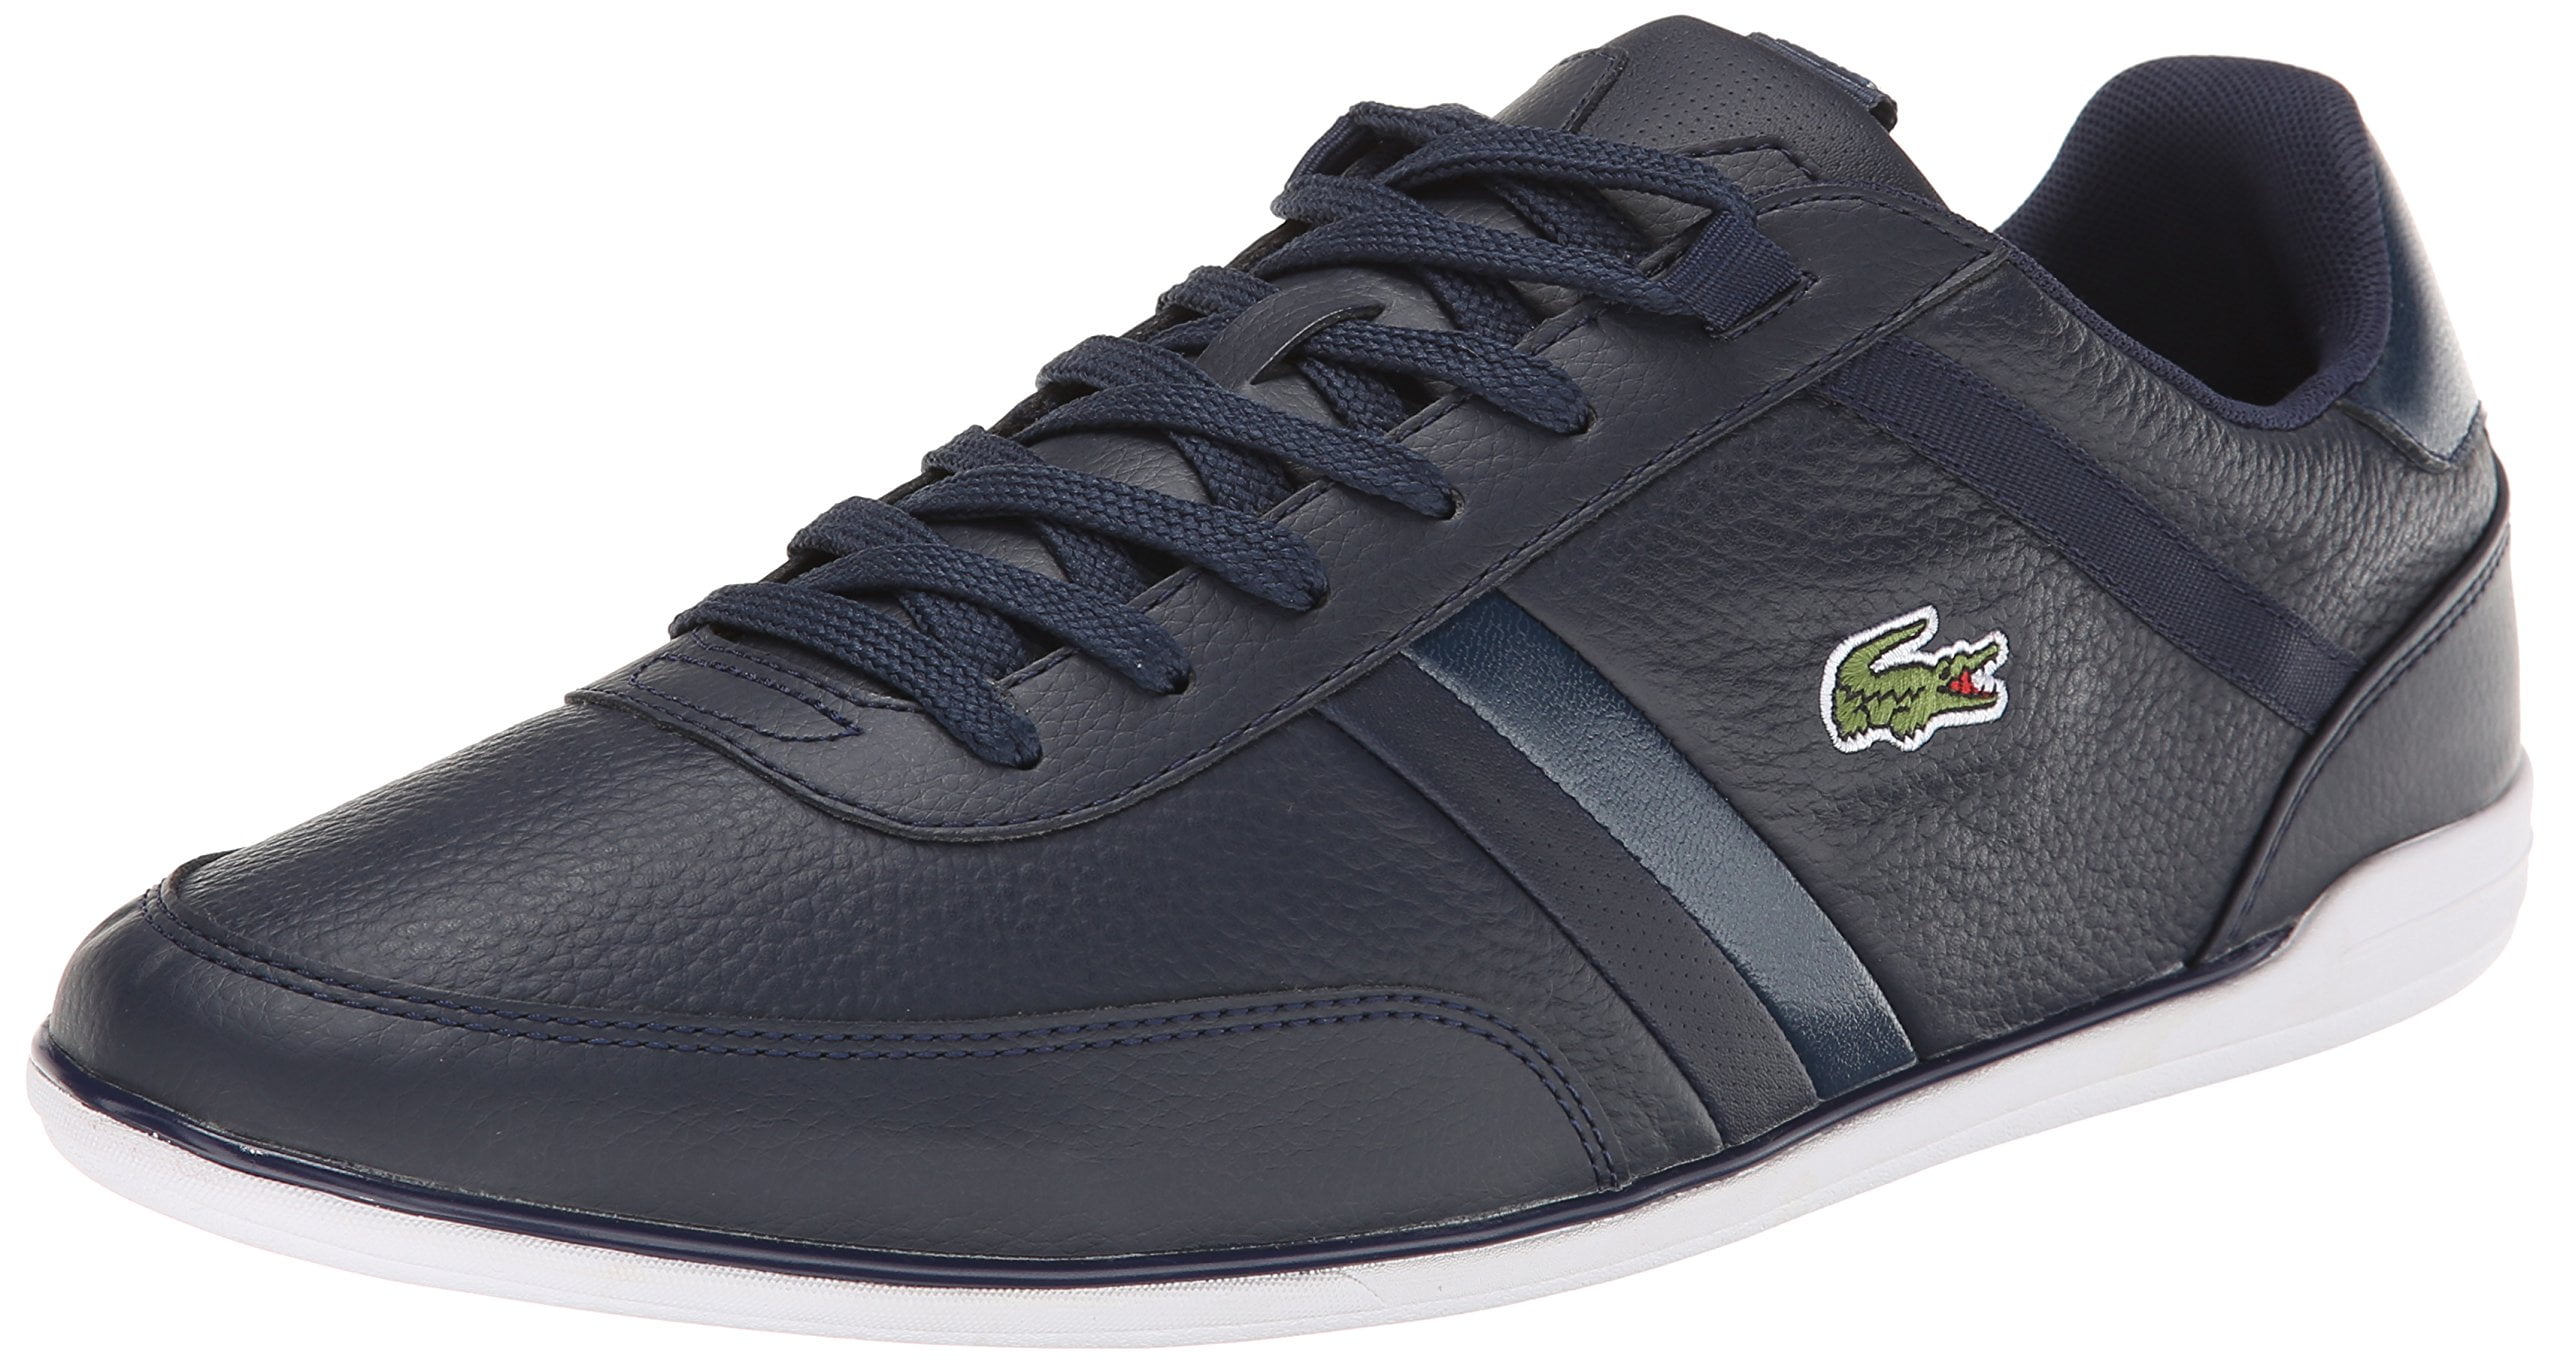 Lacoste Giron Nal Sneakers Black - Walmart.com